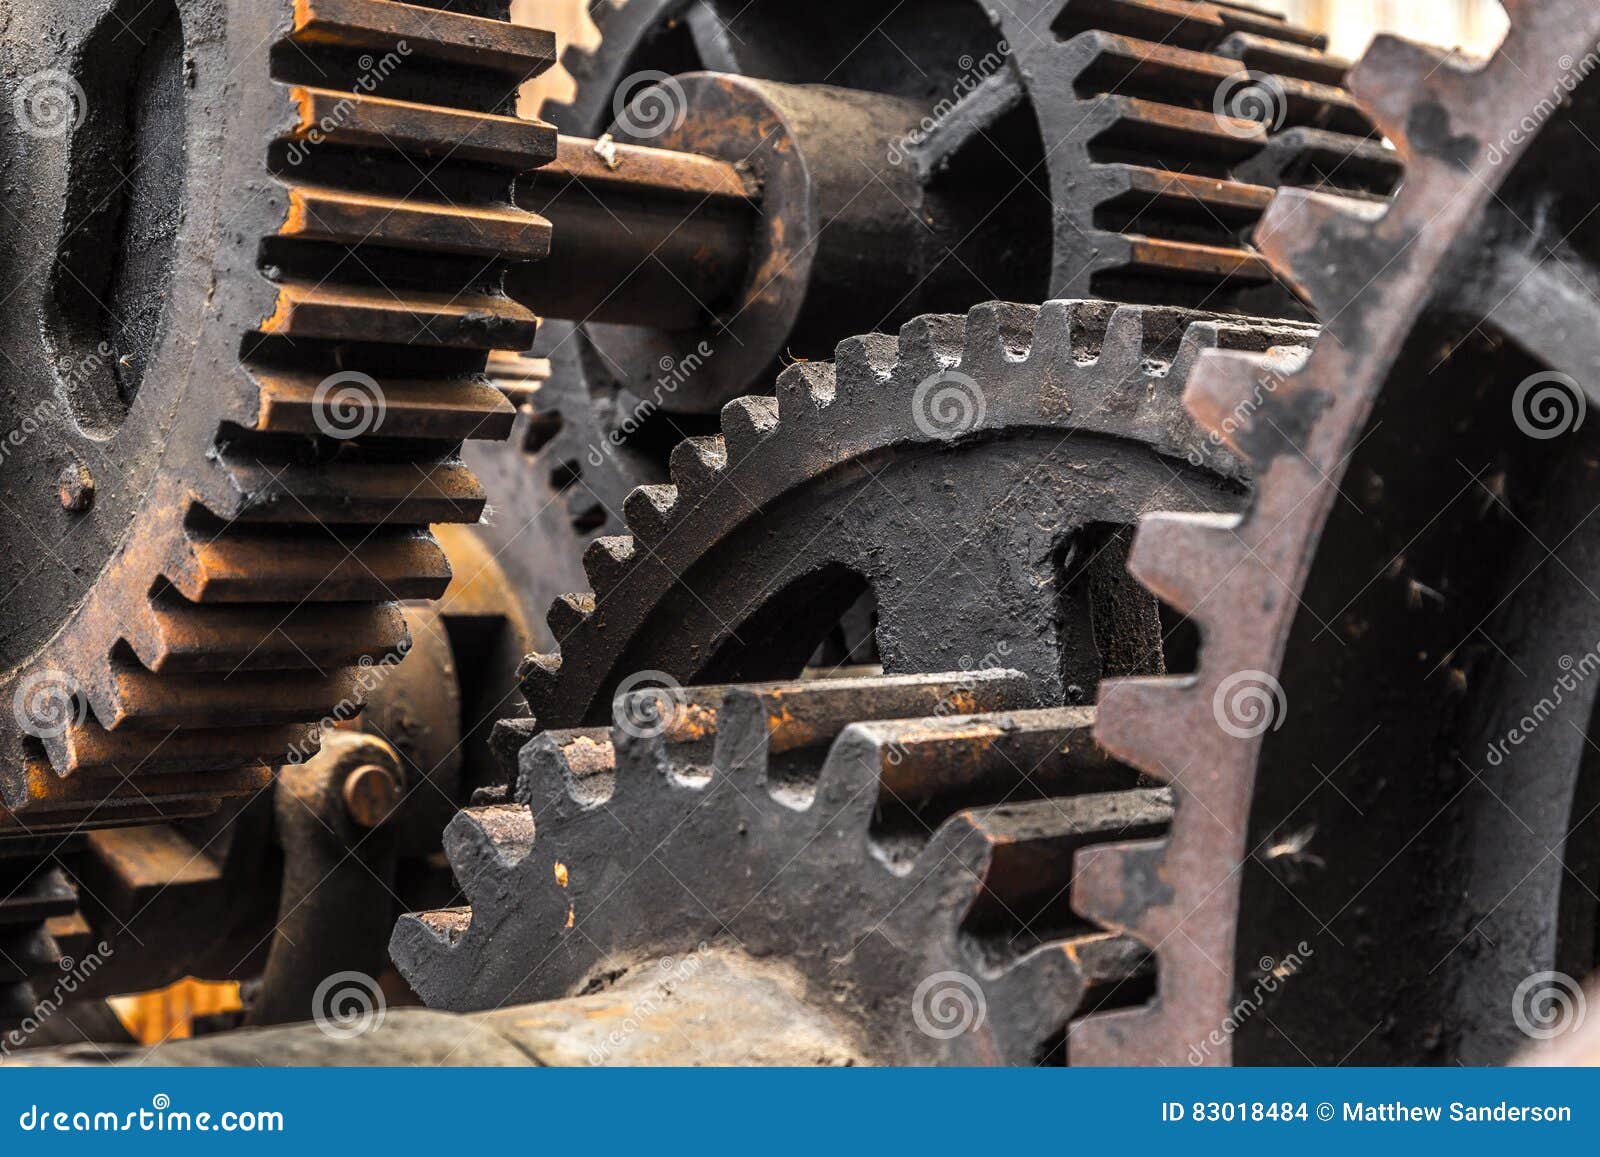 closeup of cogs, gears, machinery